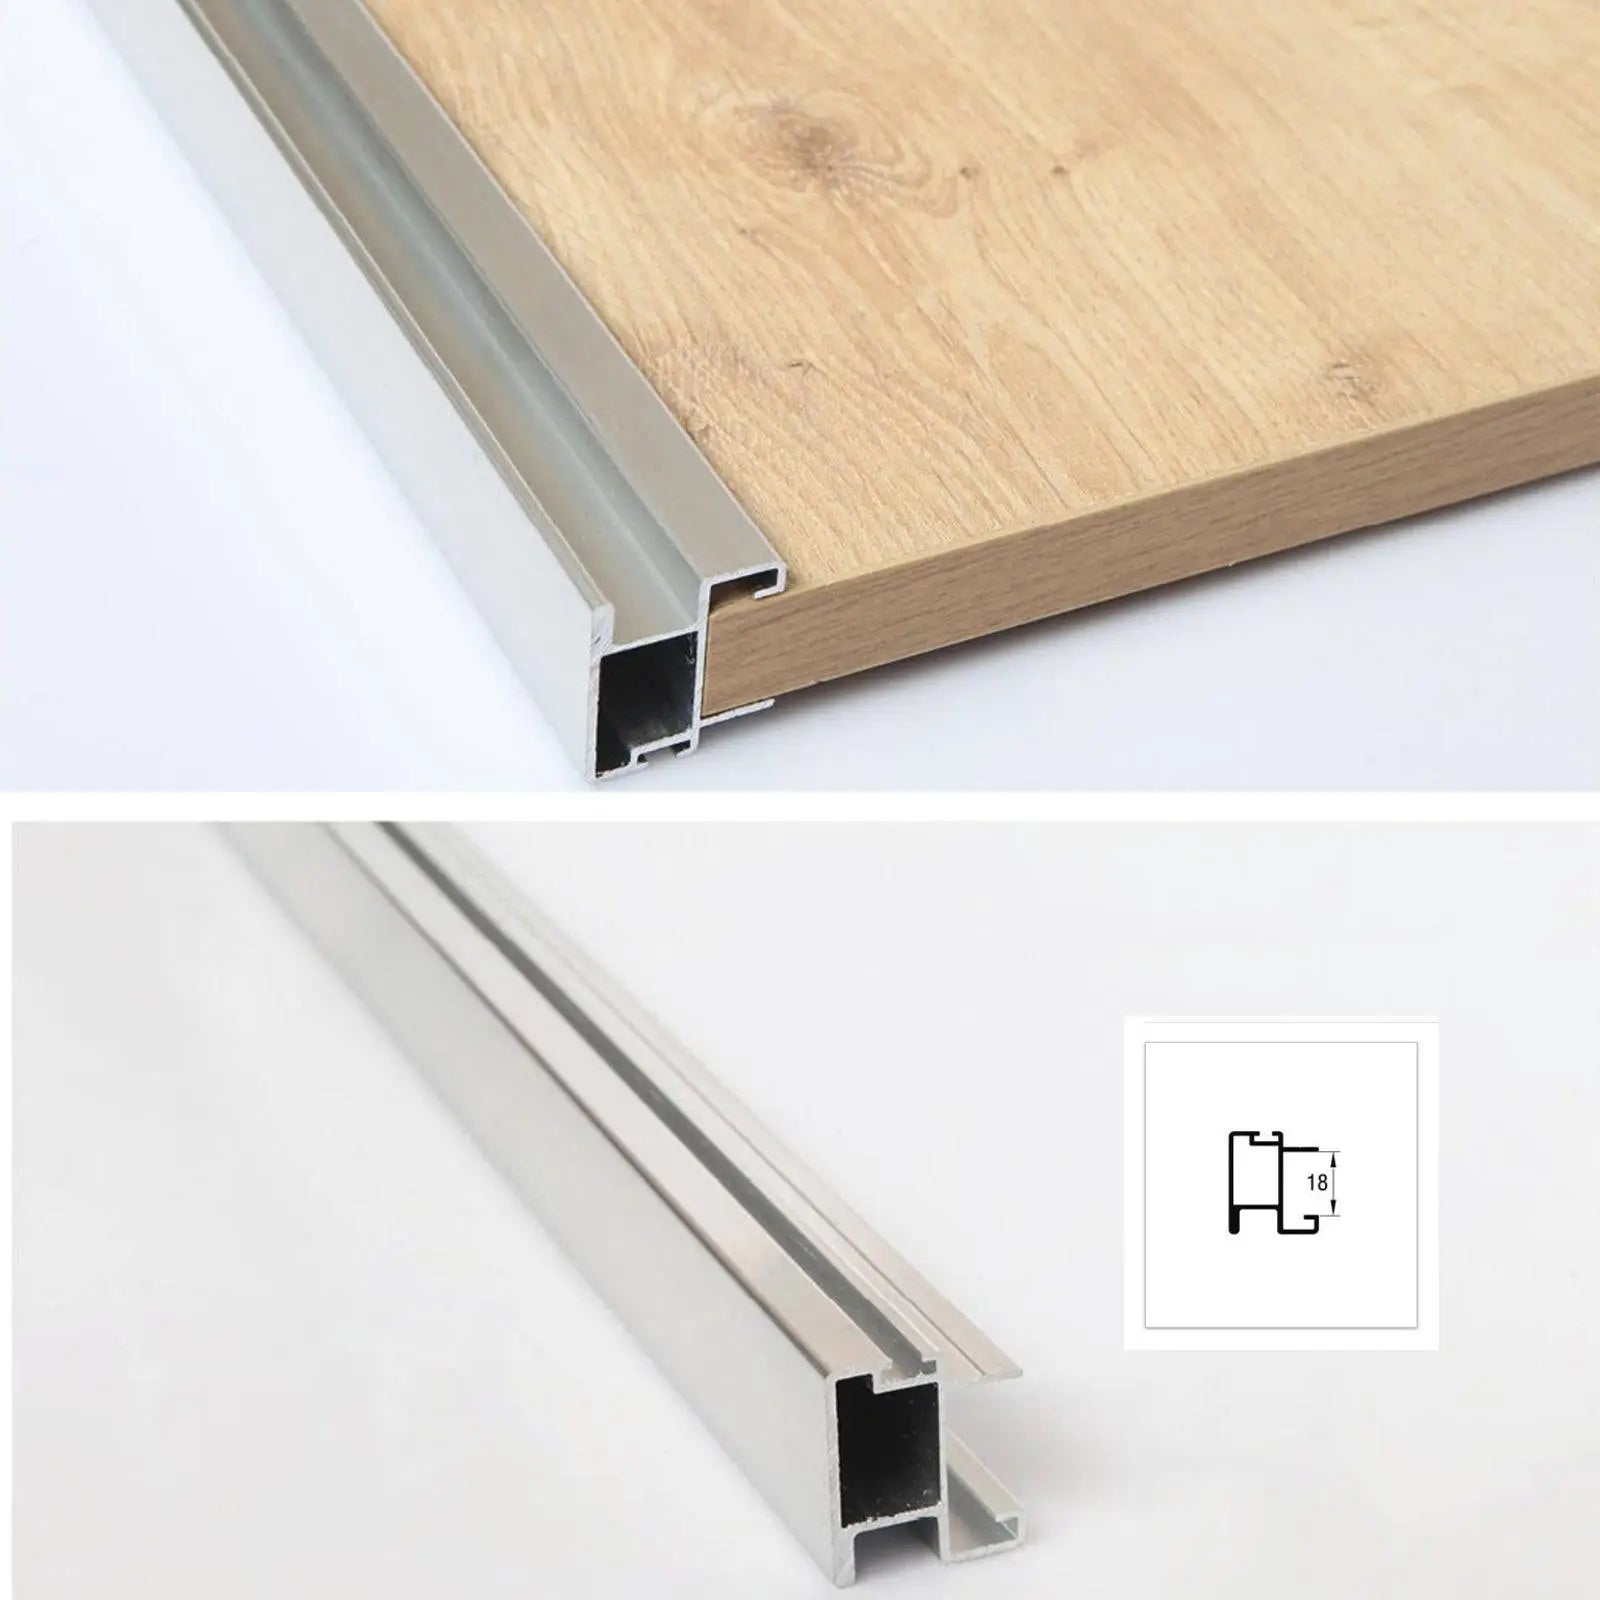 2.5metre Aluminium Profile Handle For Sliding Wardrobes - Decor And Decor